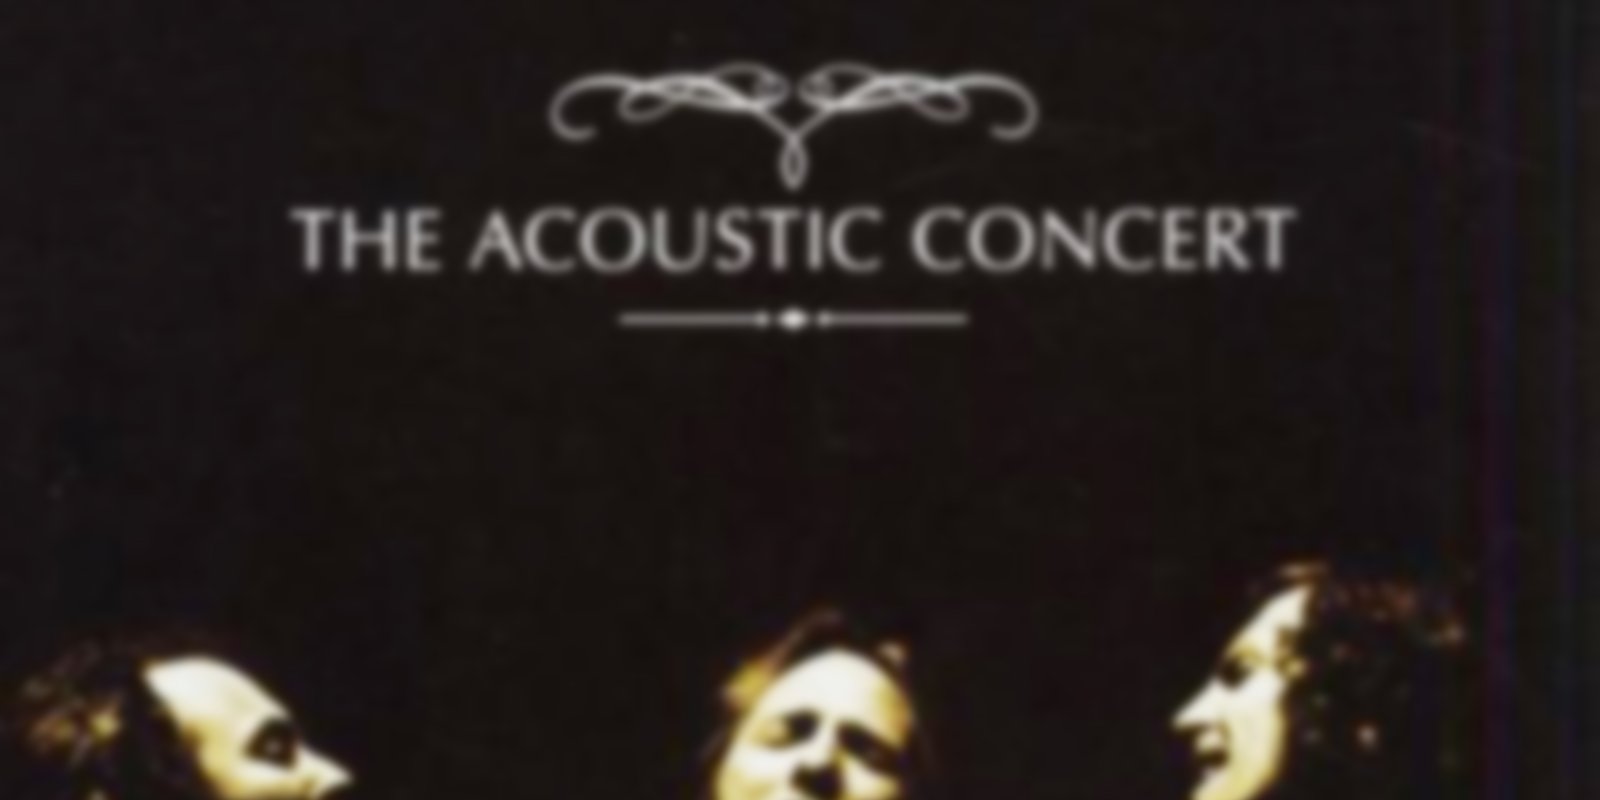 Crosby, Stills & Nash - The Acoustic Concert